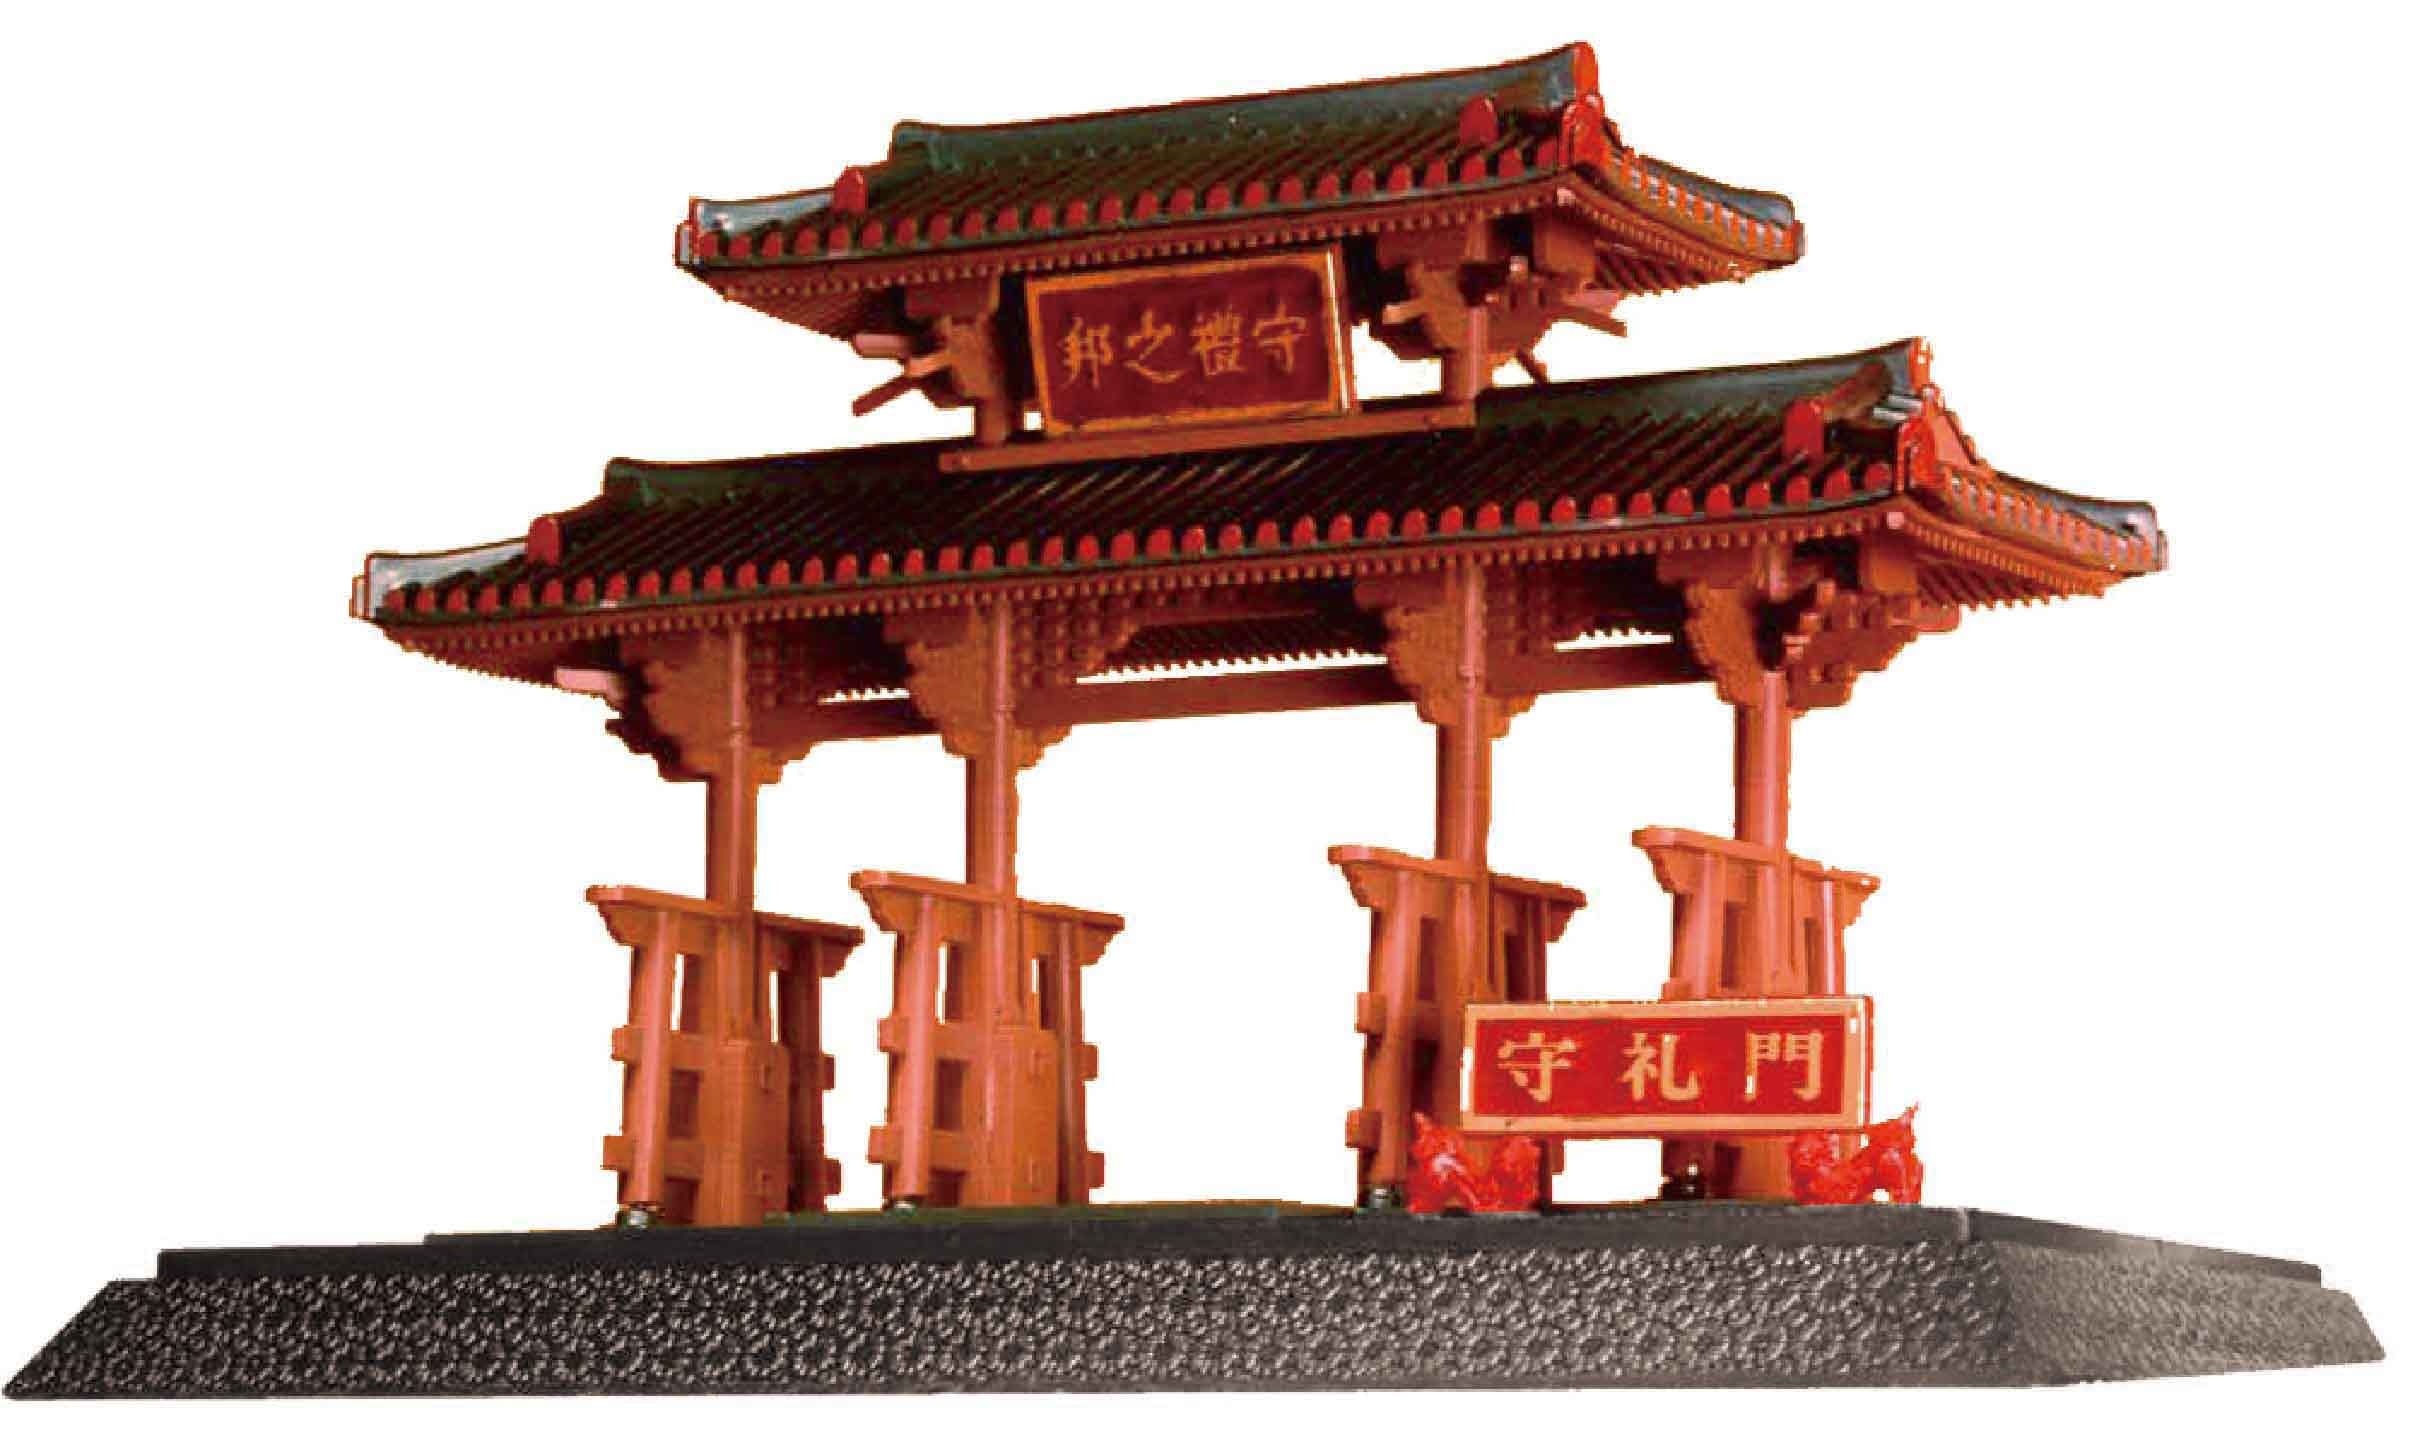 500553 1/100 Okinawa Shuri Castle Shureimon by Fujimi for sale online 